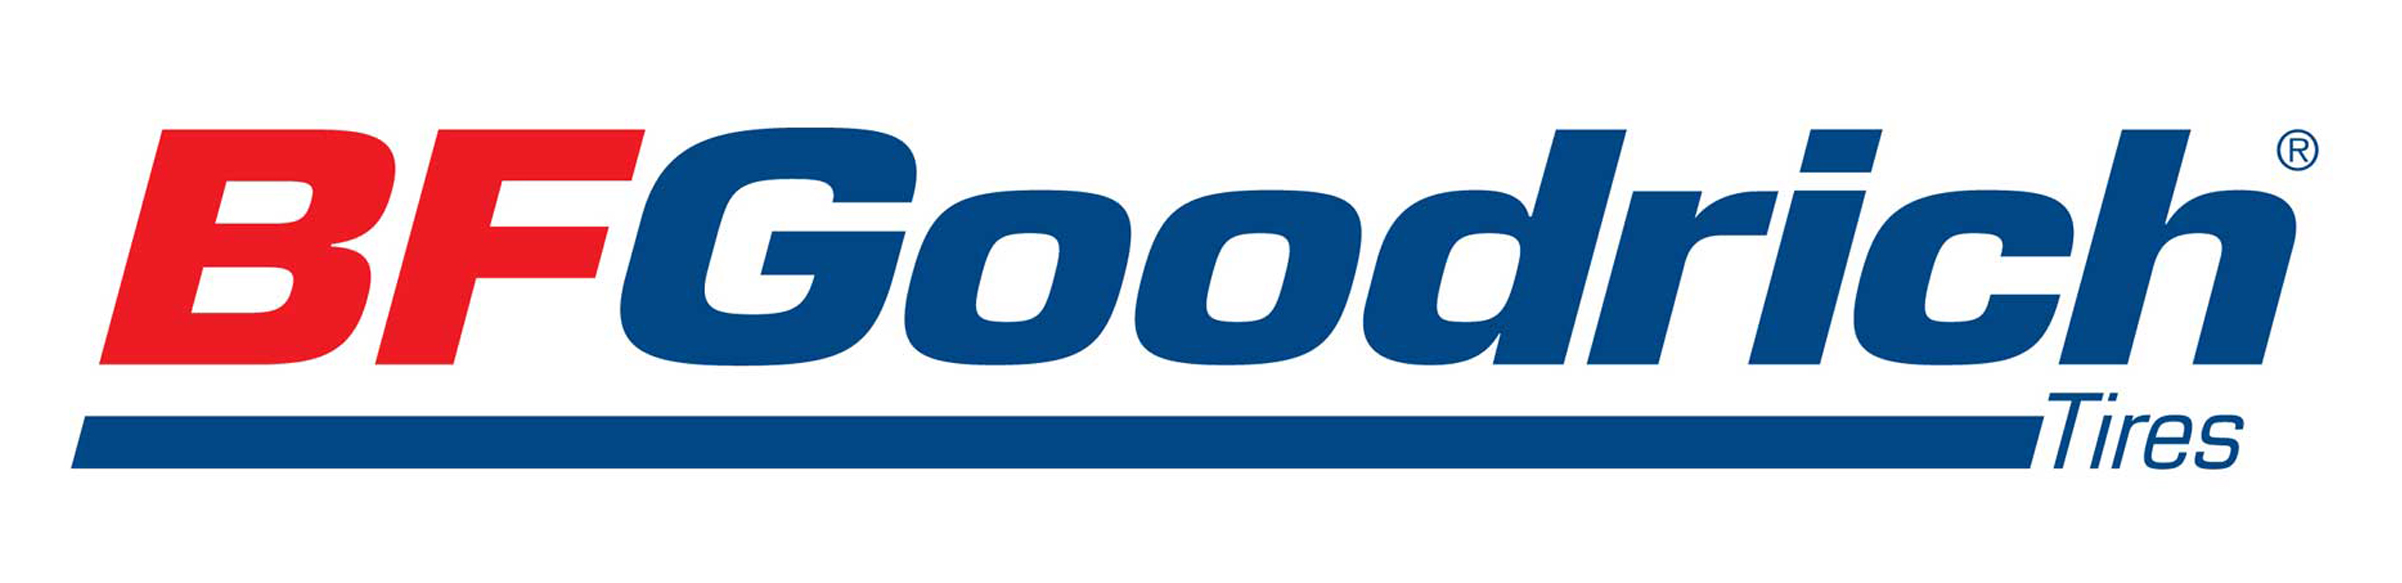 BFGoodrich tires logo